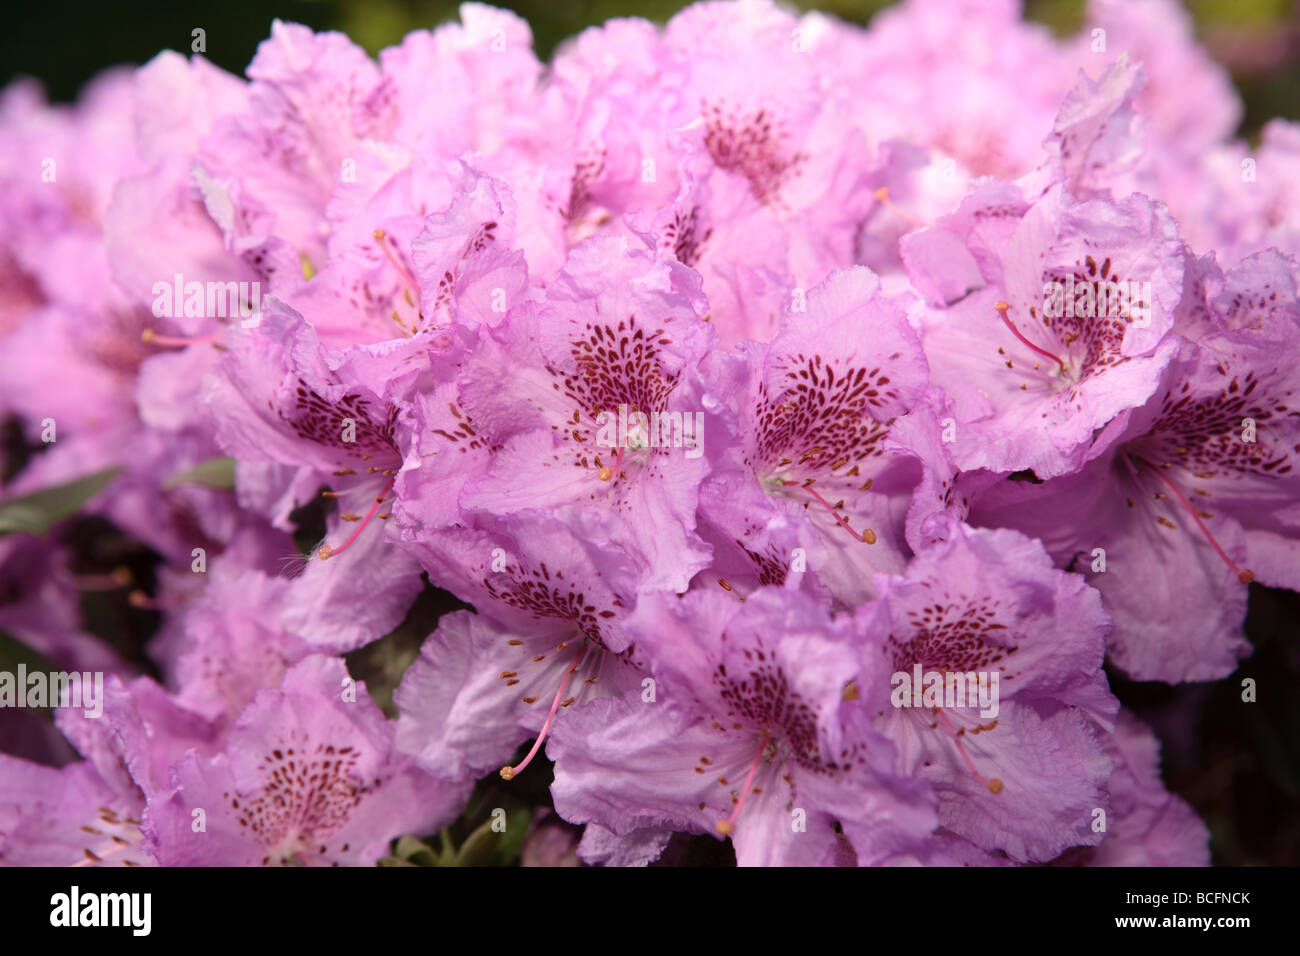 Yakushima rhododendron, Praktrododendron (Rhododendron Yakushimanum) Stock Photo